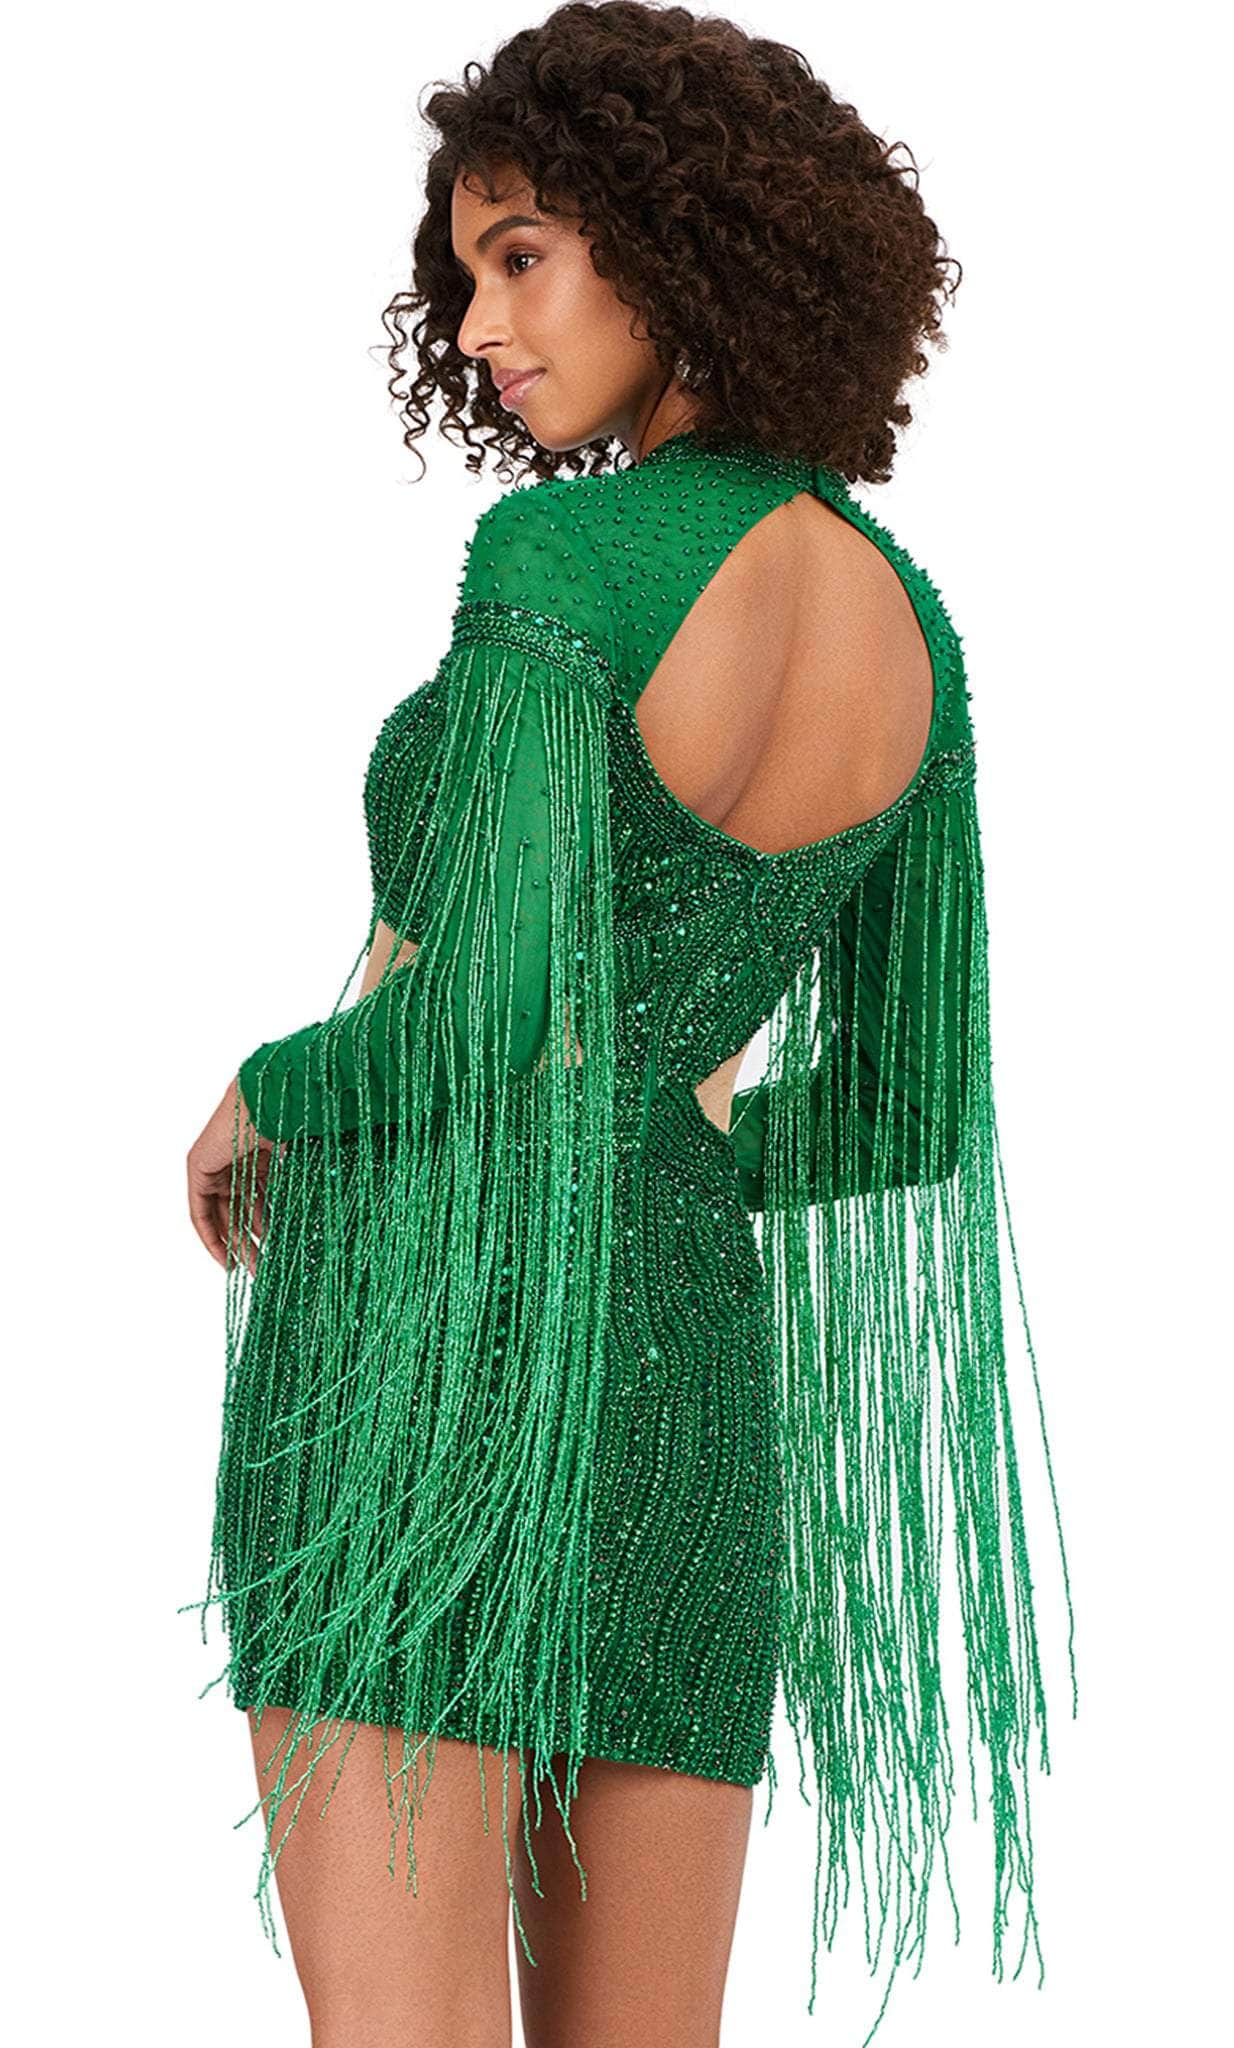 ashley lauren 4601 - long sleeve dress